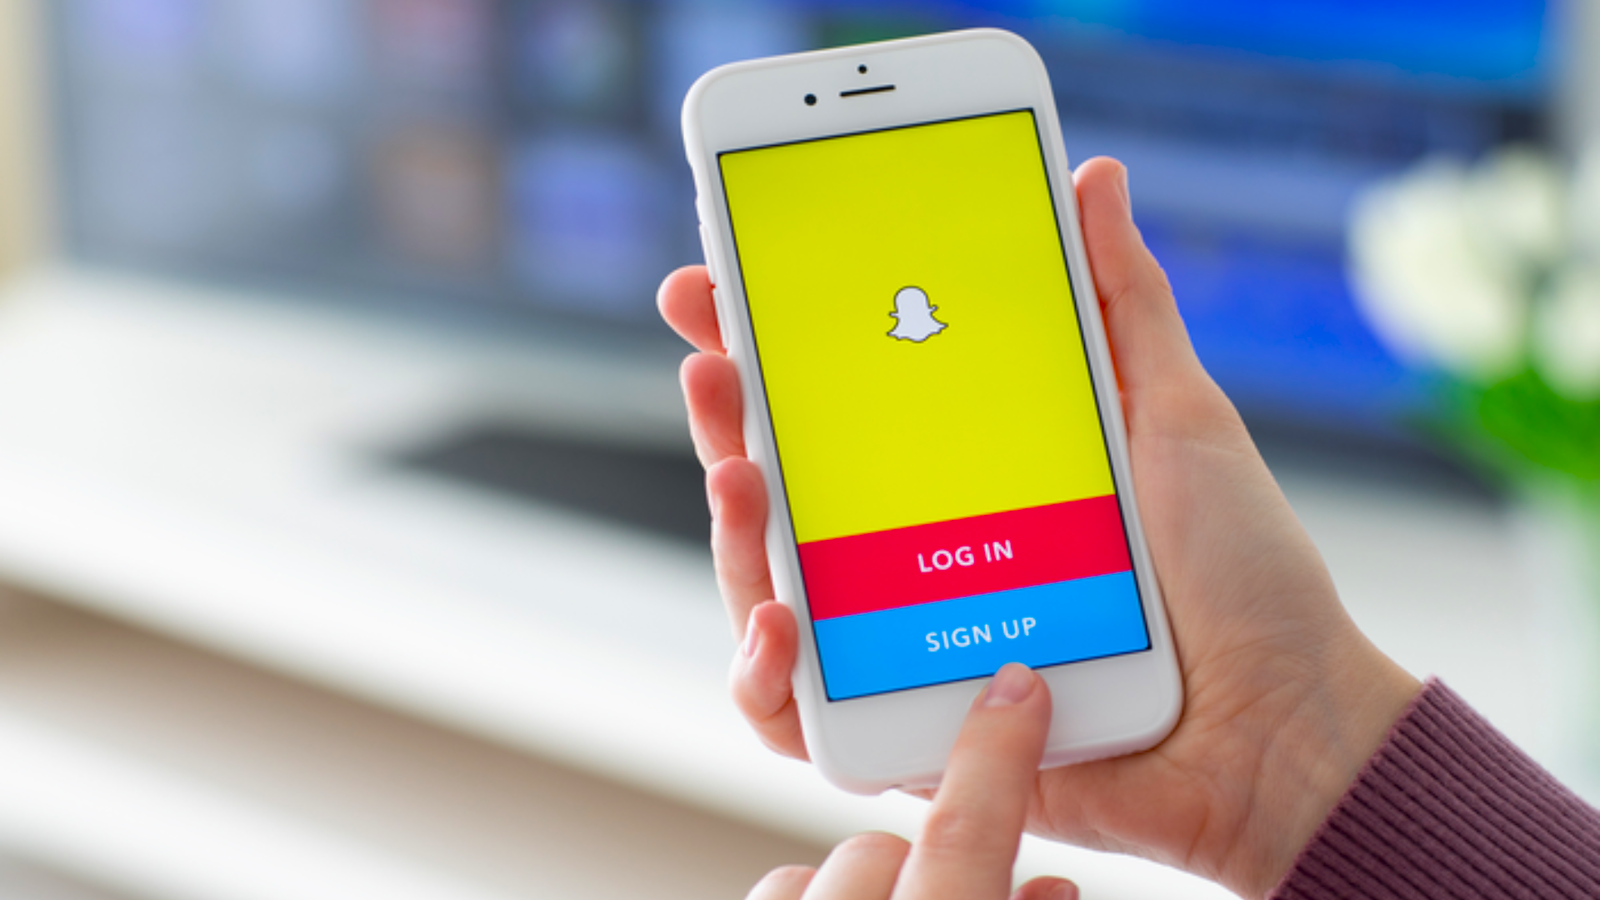 How to make snapchat dark mode snapchat on phone